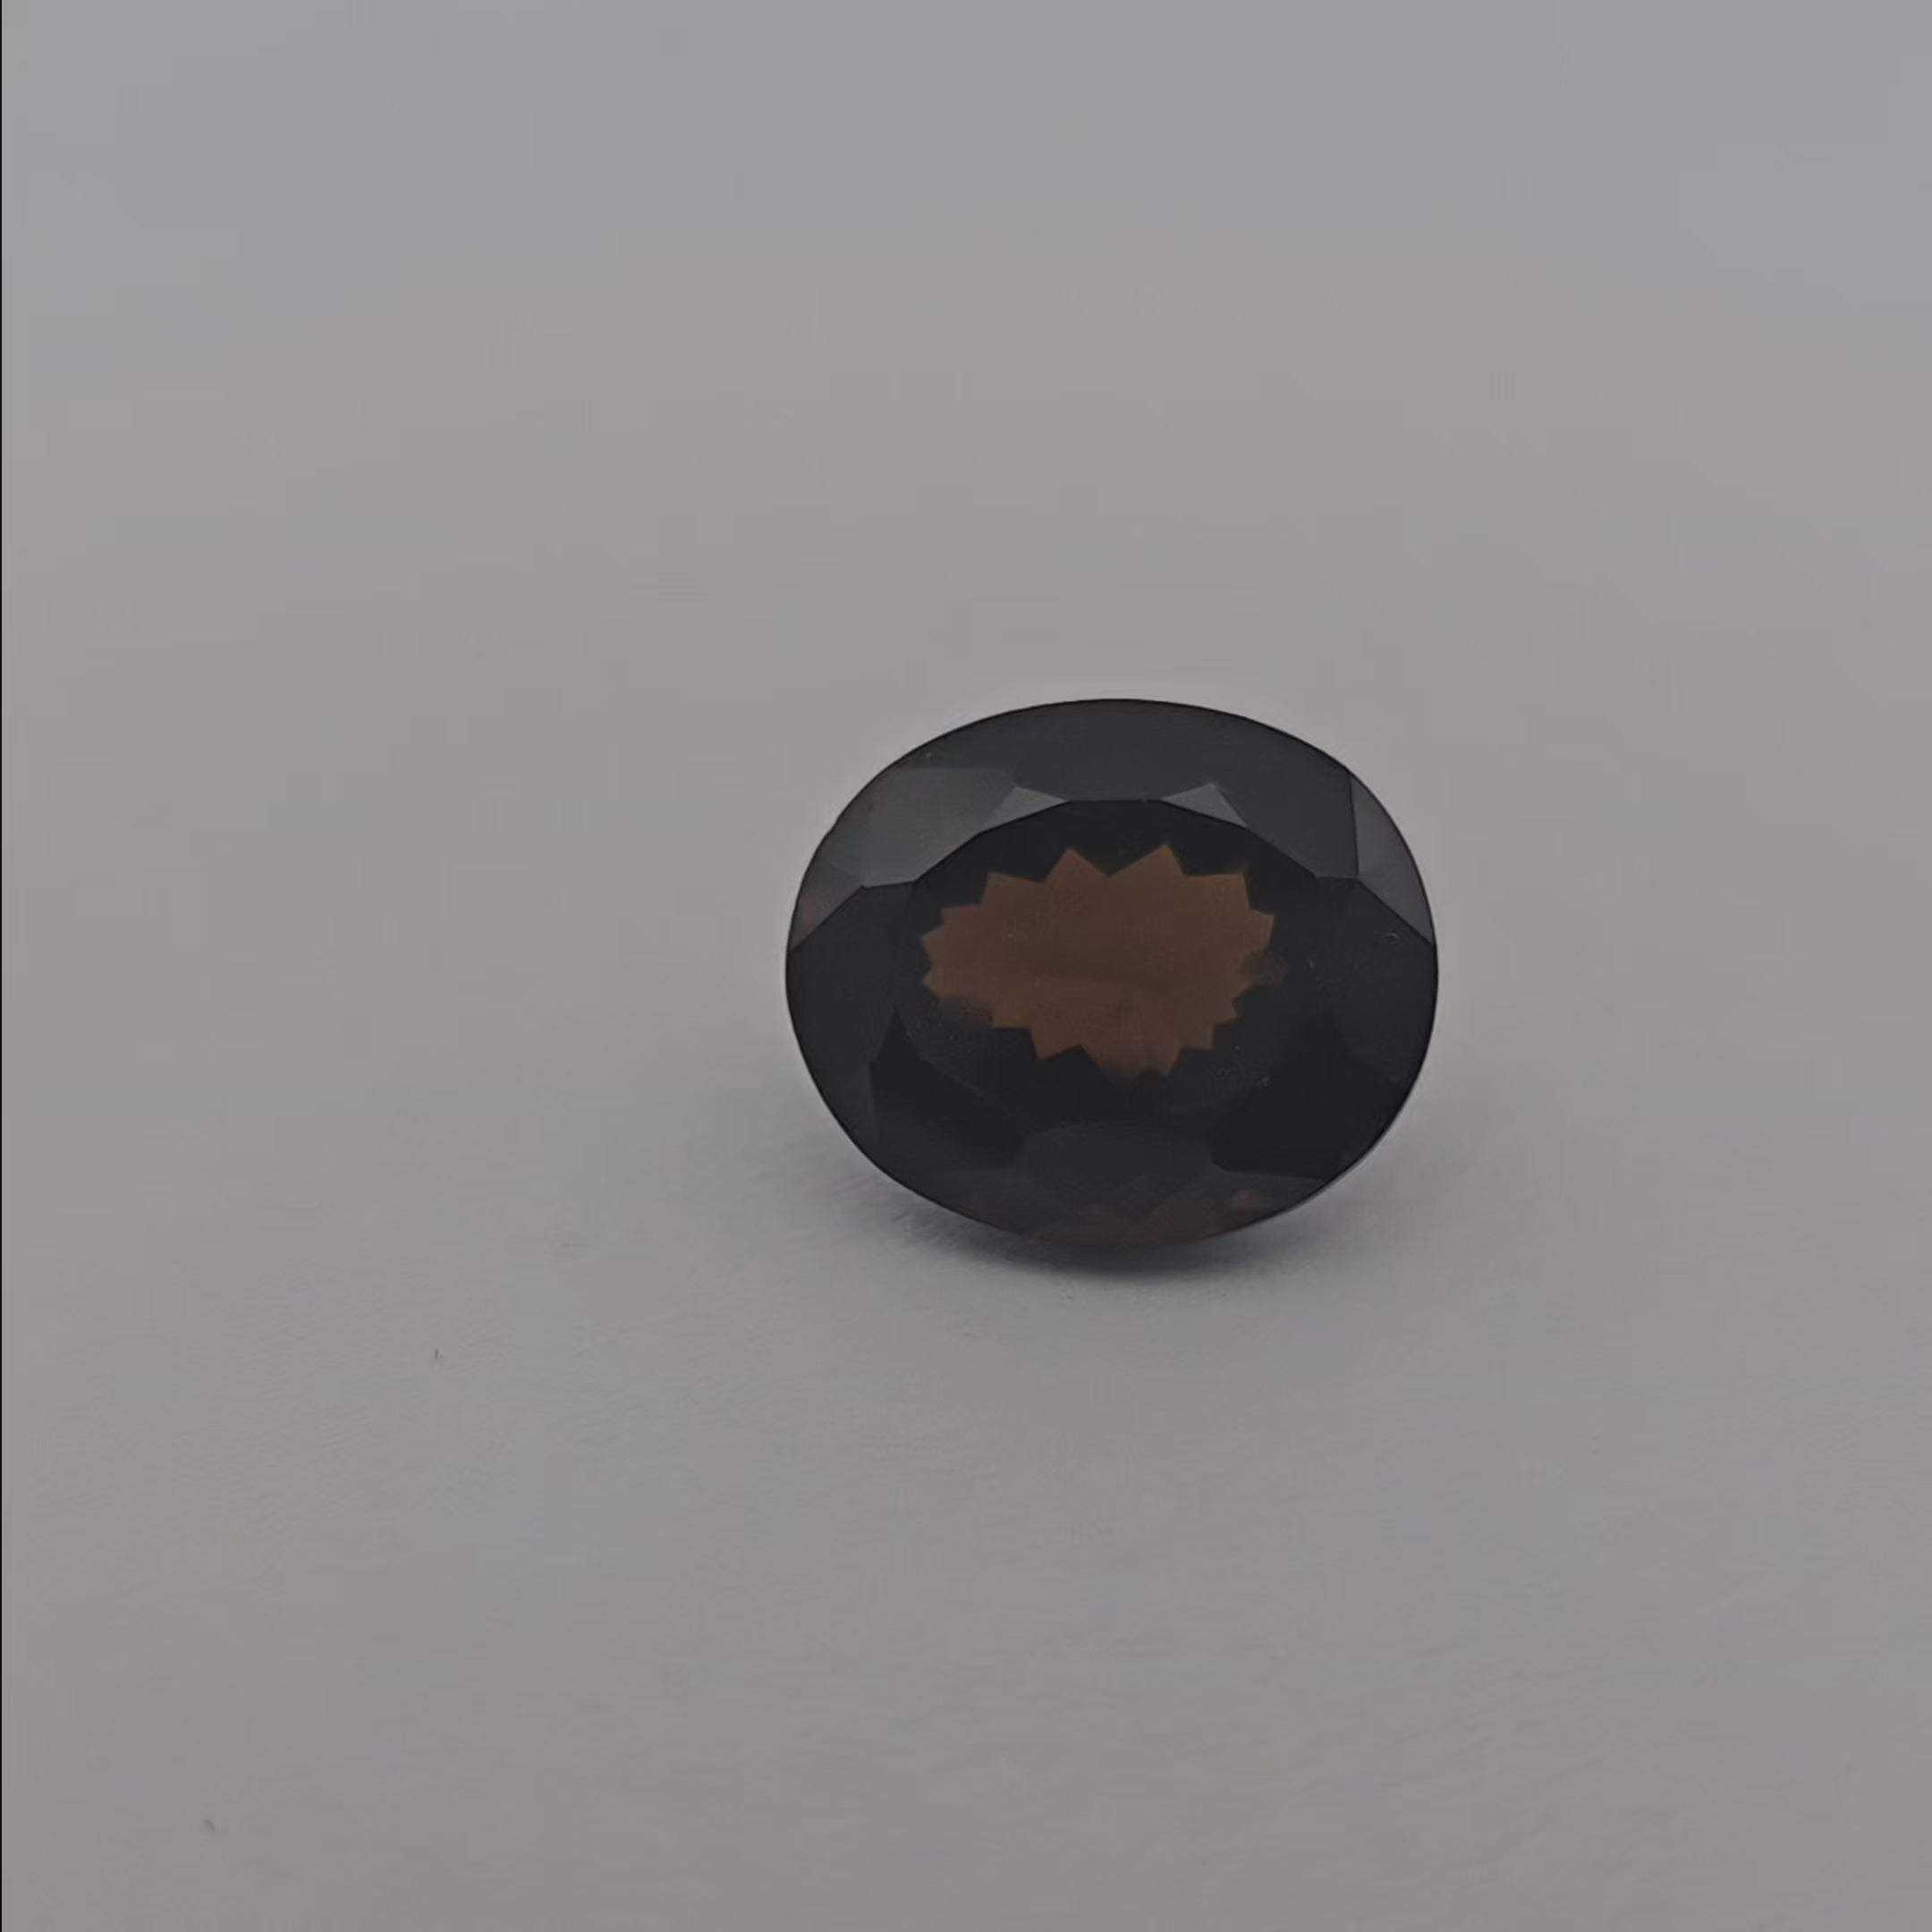 loose Natural Tourmaline Stone 8.57 Carats Oval Cut (14 x 11.8  mm)